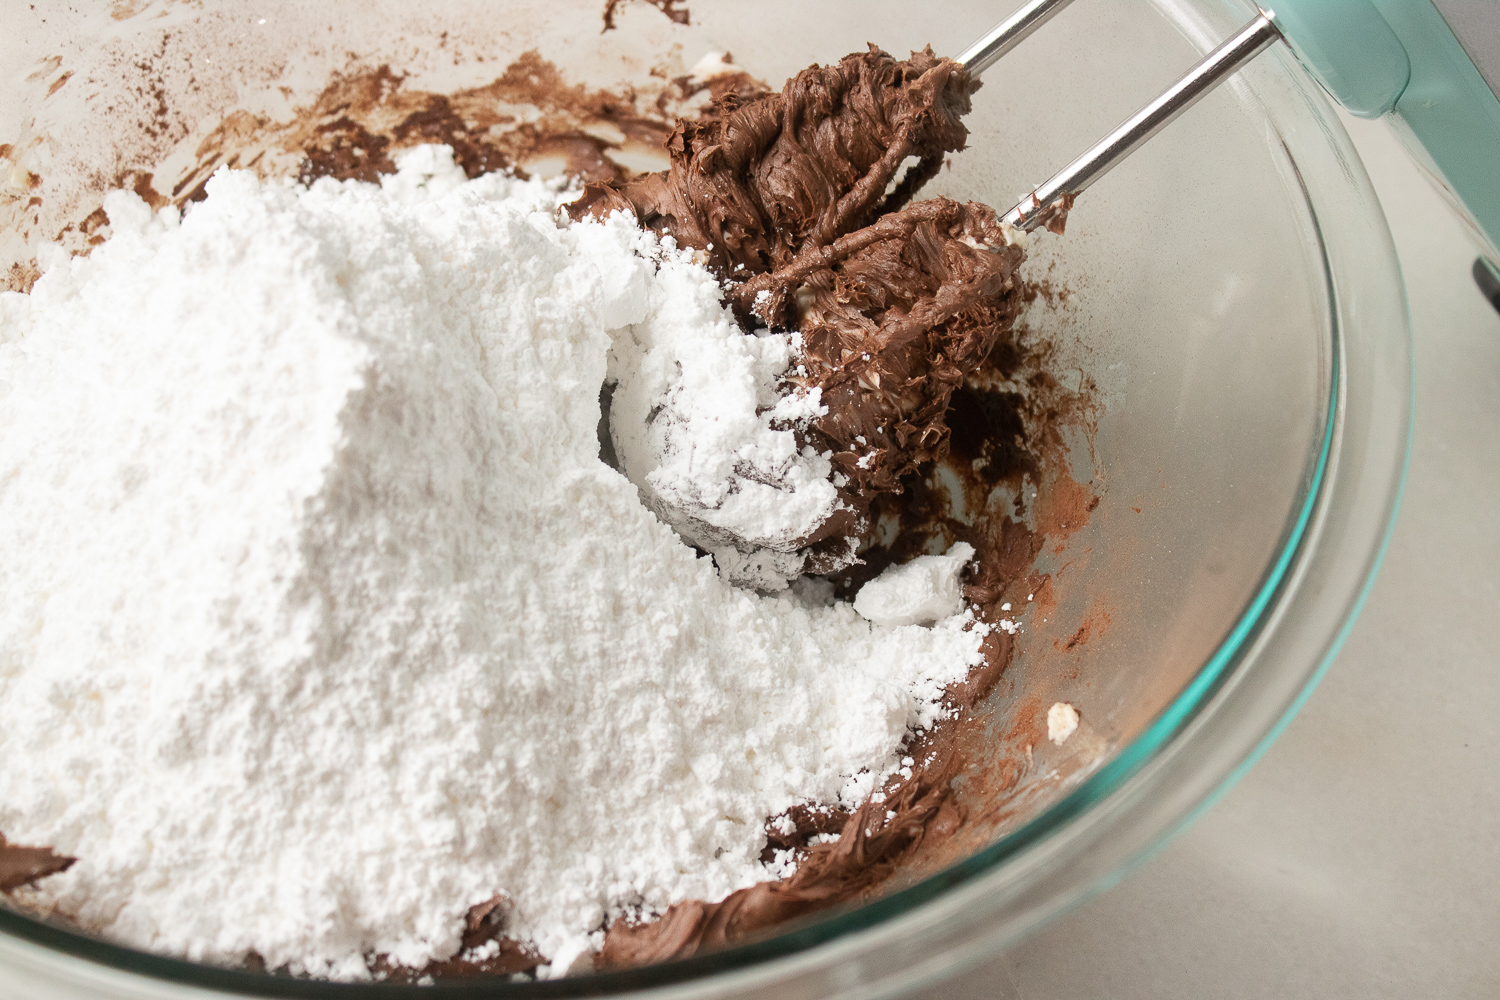 Adding in the powdered sugar.